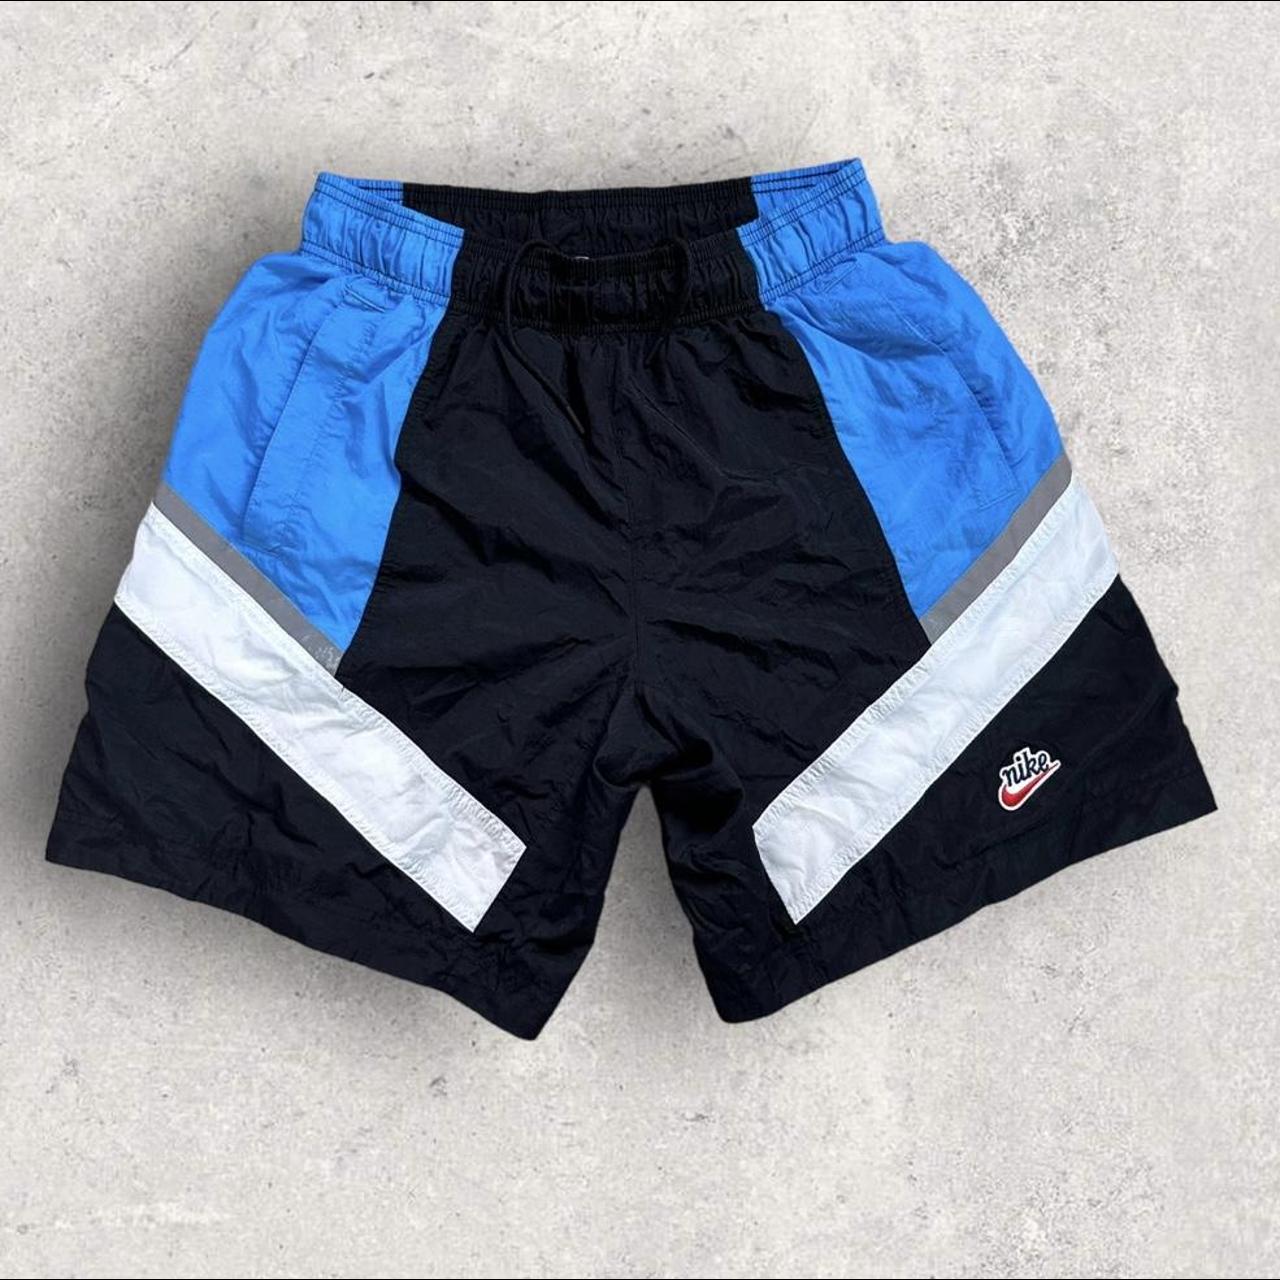 Nike Men's Black and Blue Shorts